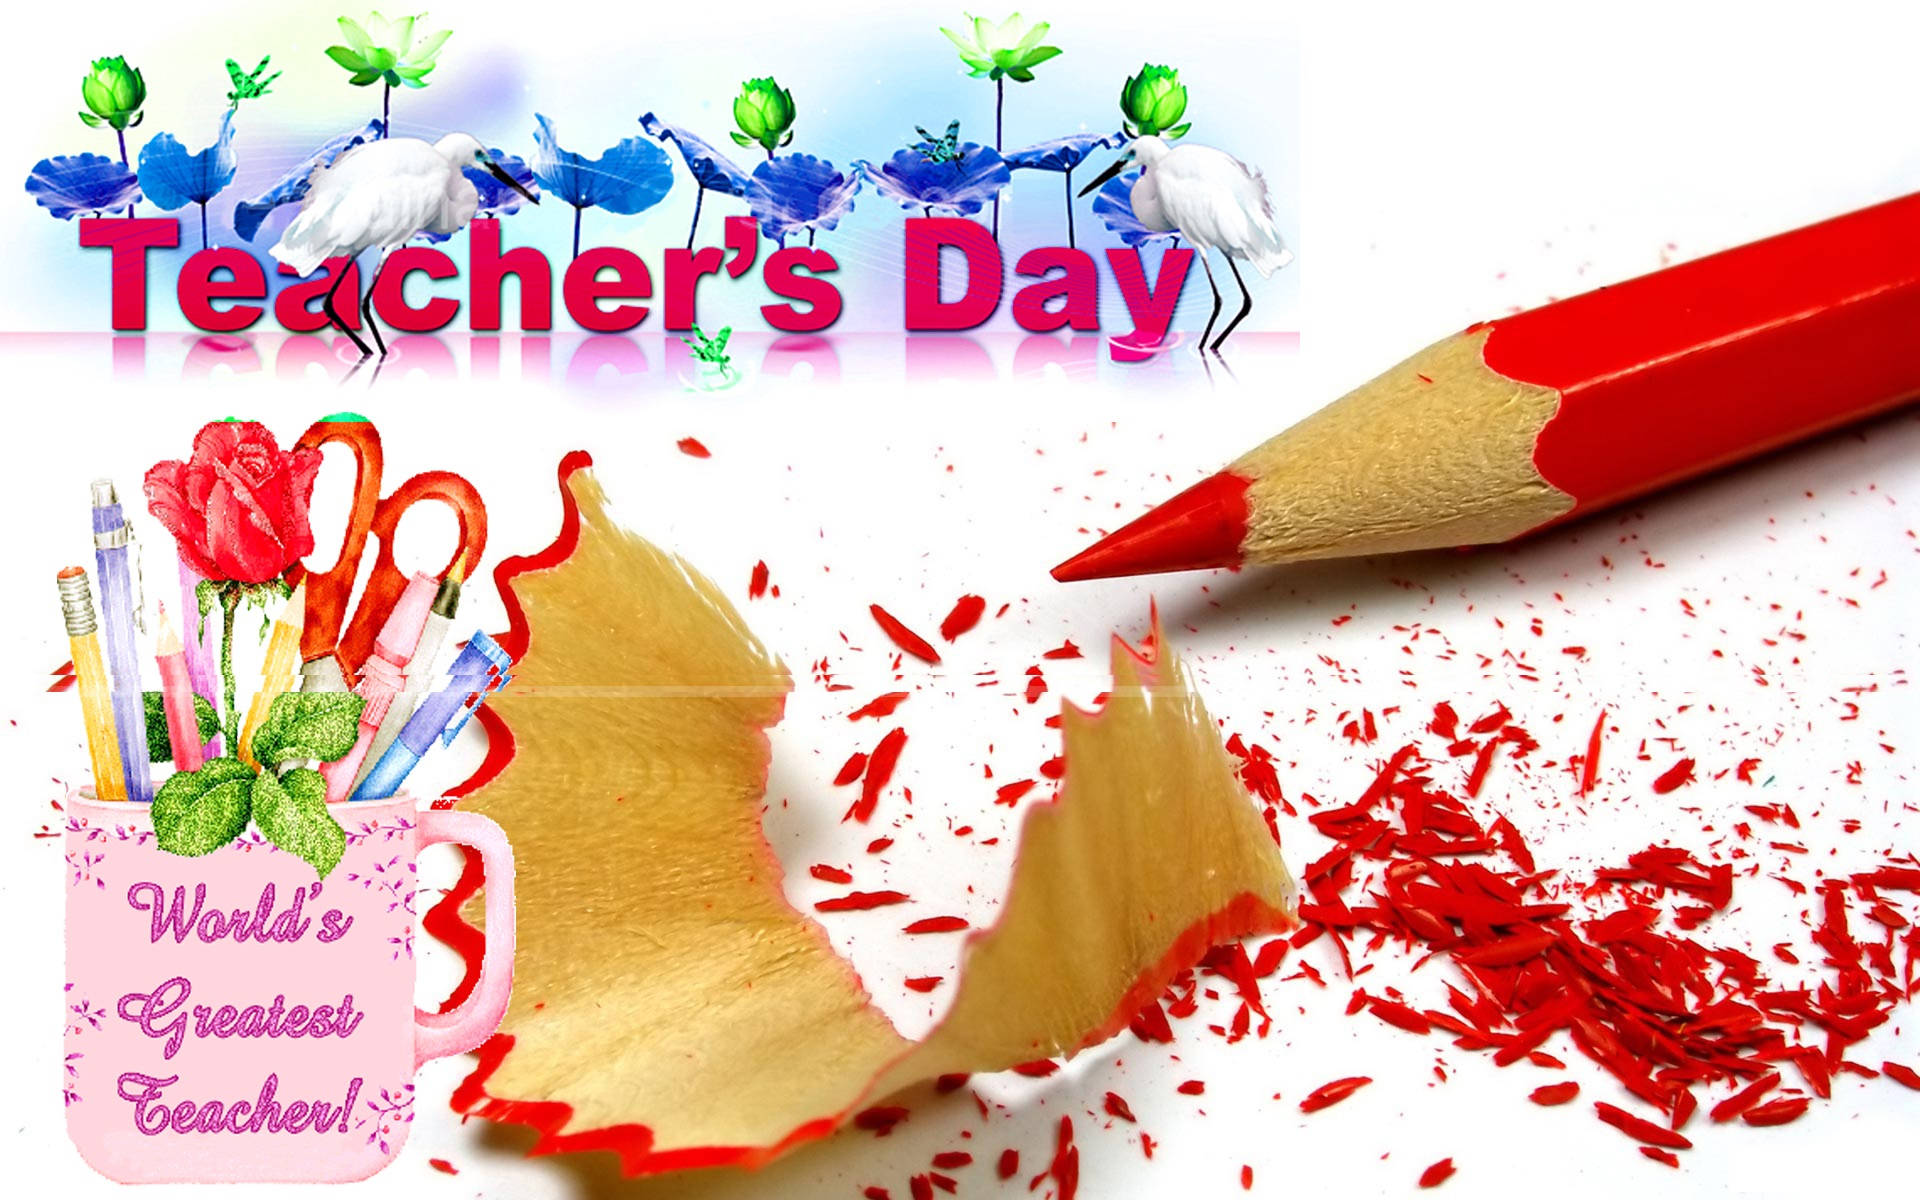 Happy Teachers' Day World's Greatest Background